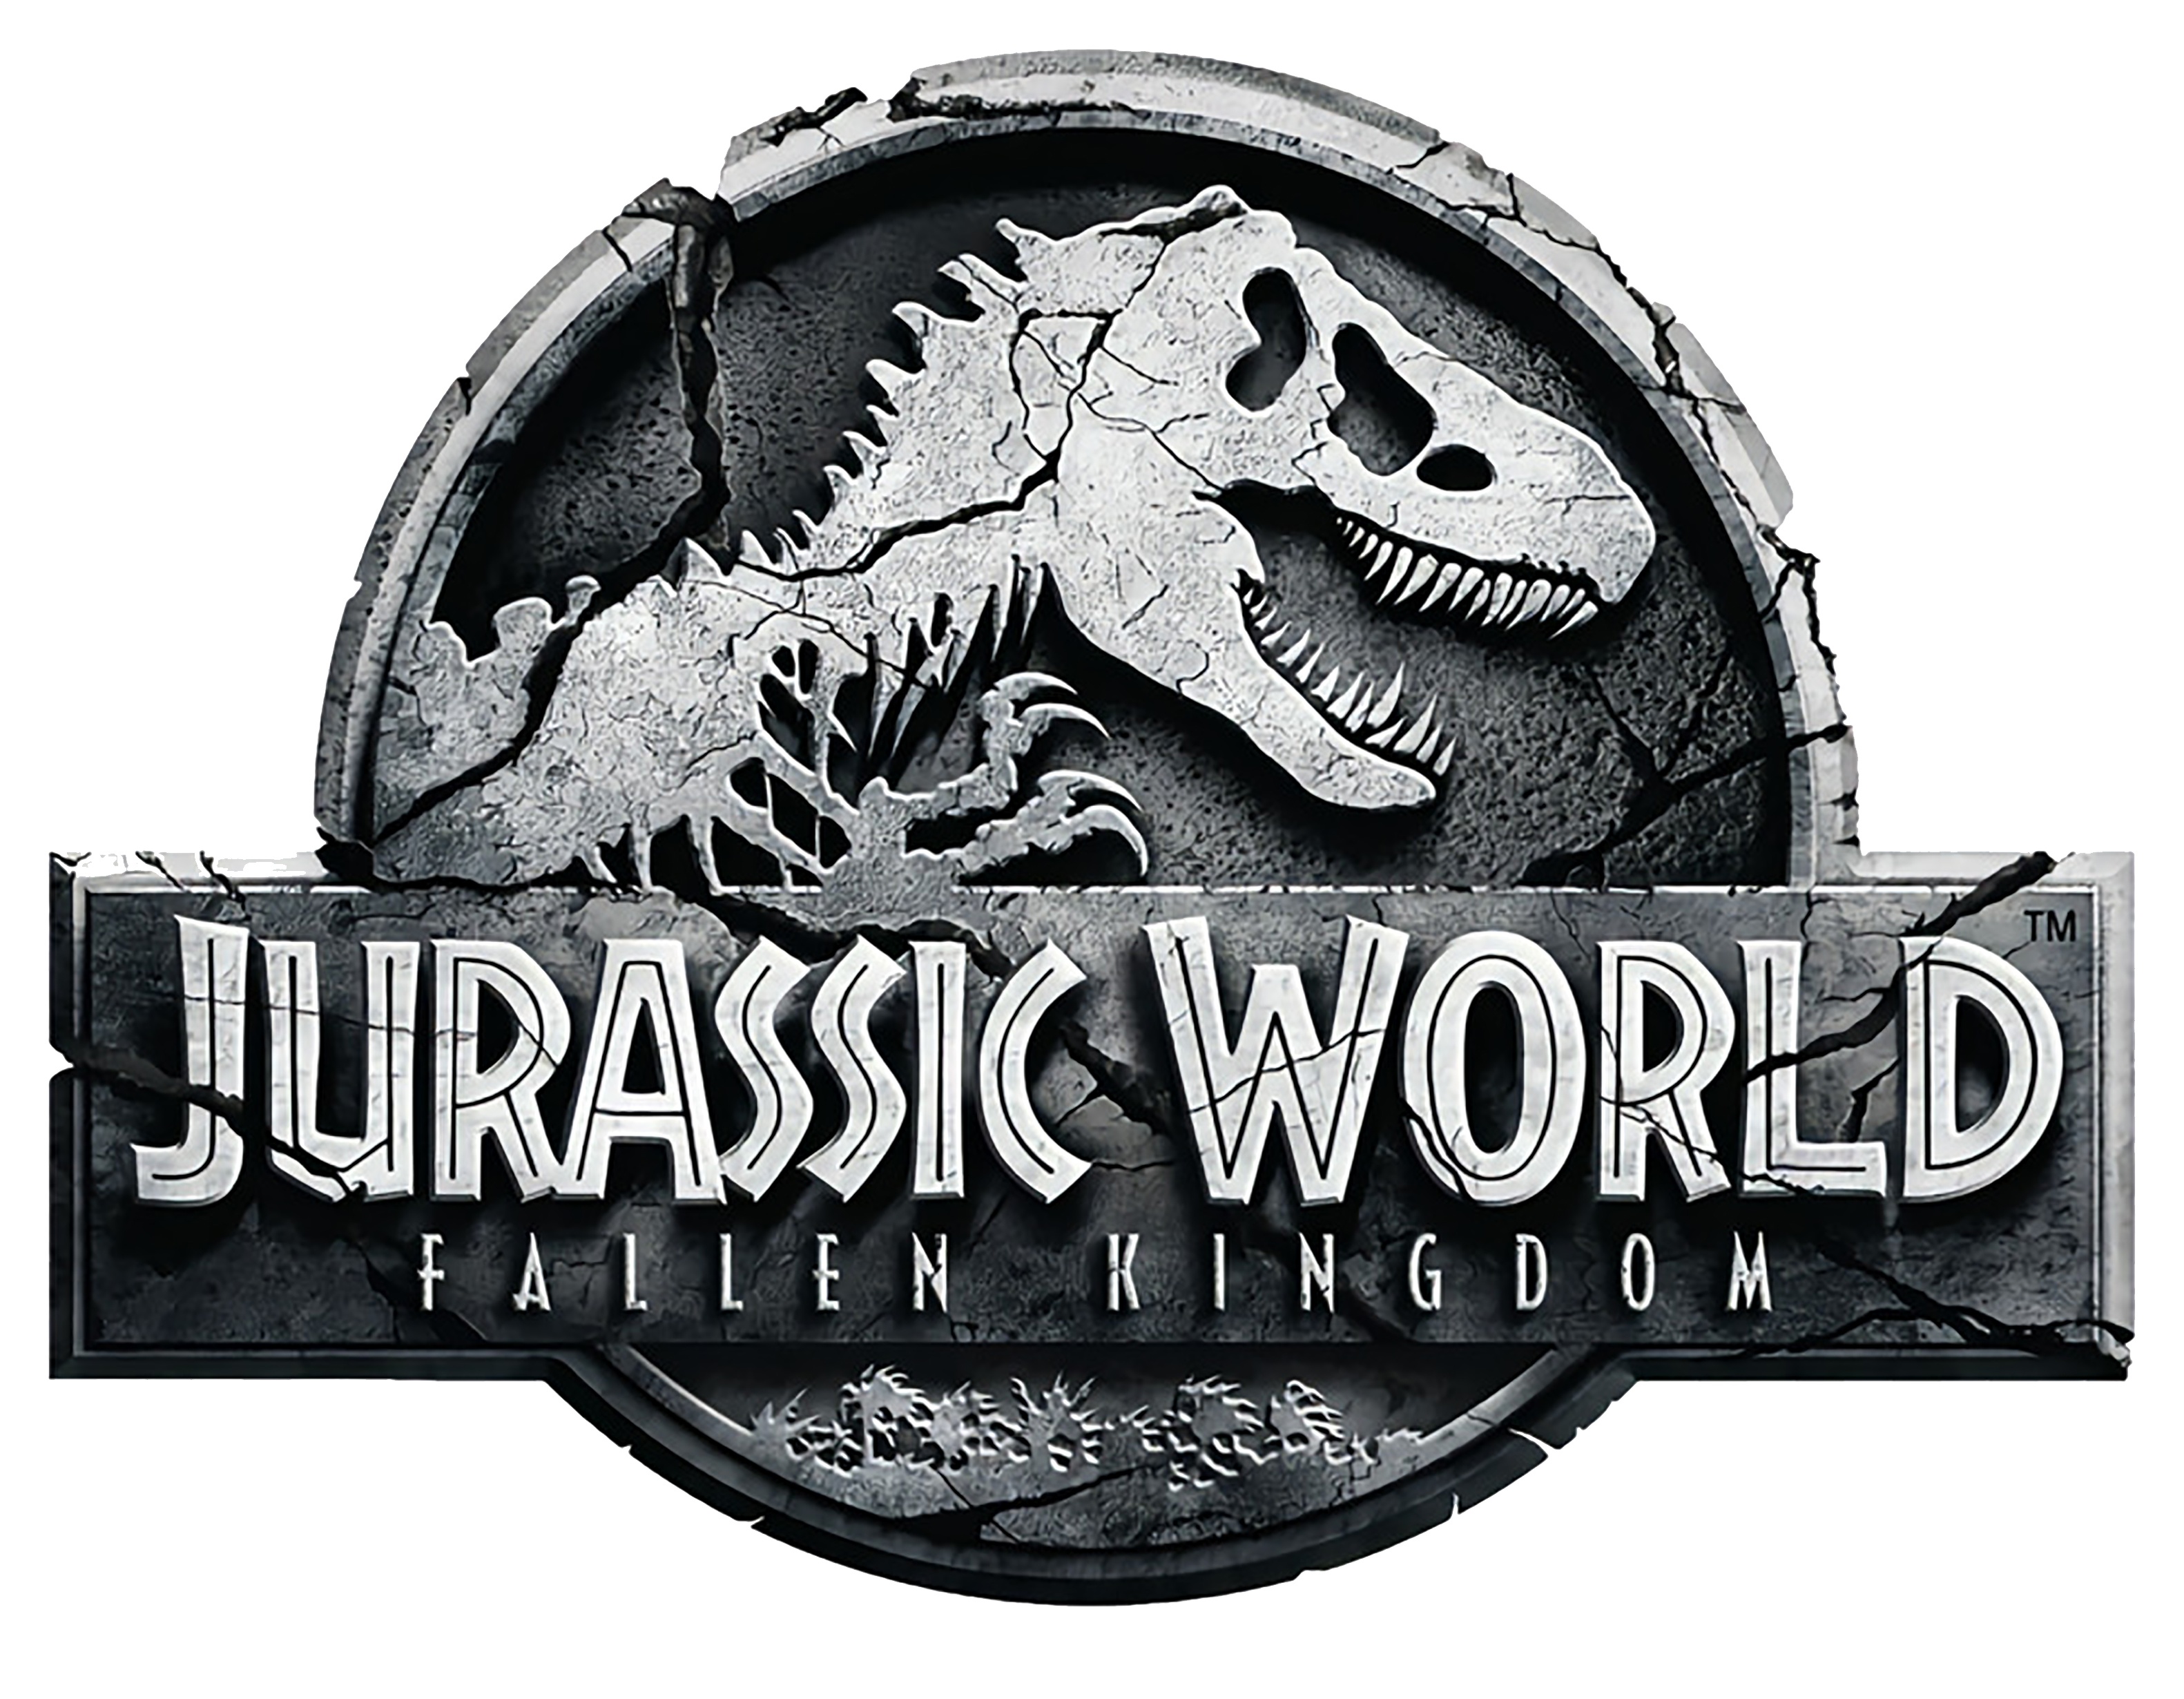 Jurassic World Iron On Transfer Design - Add Family Members